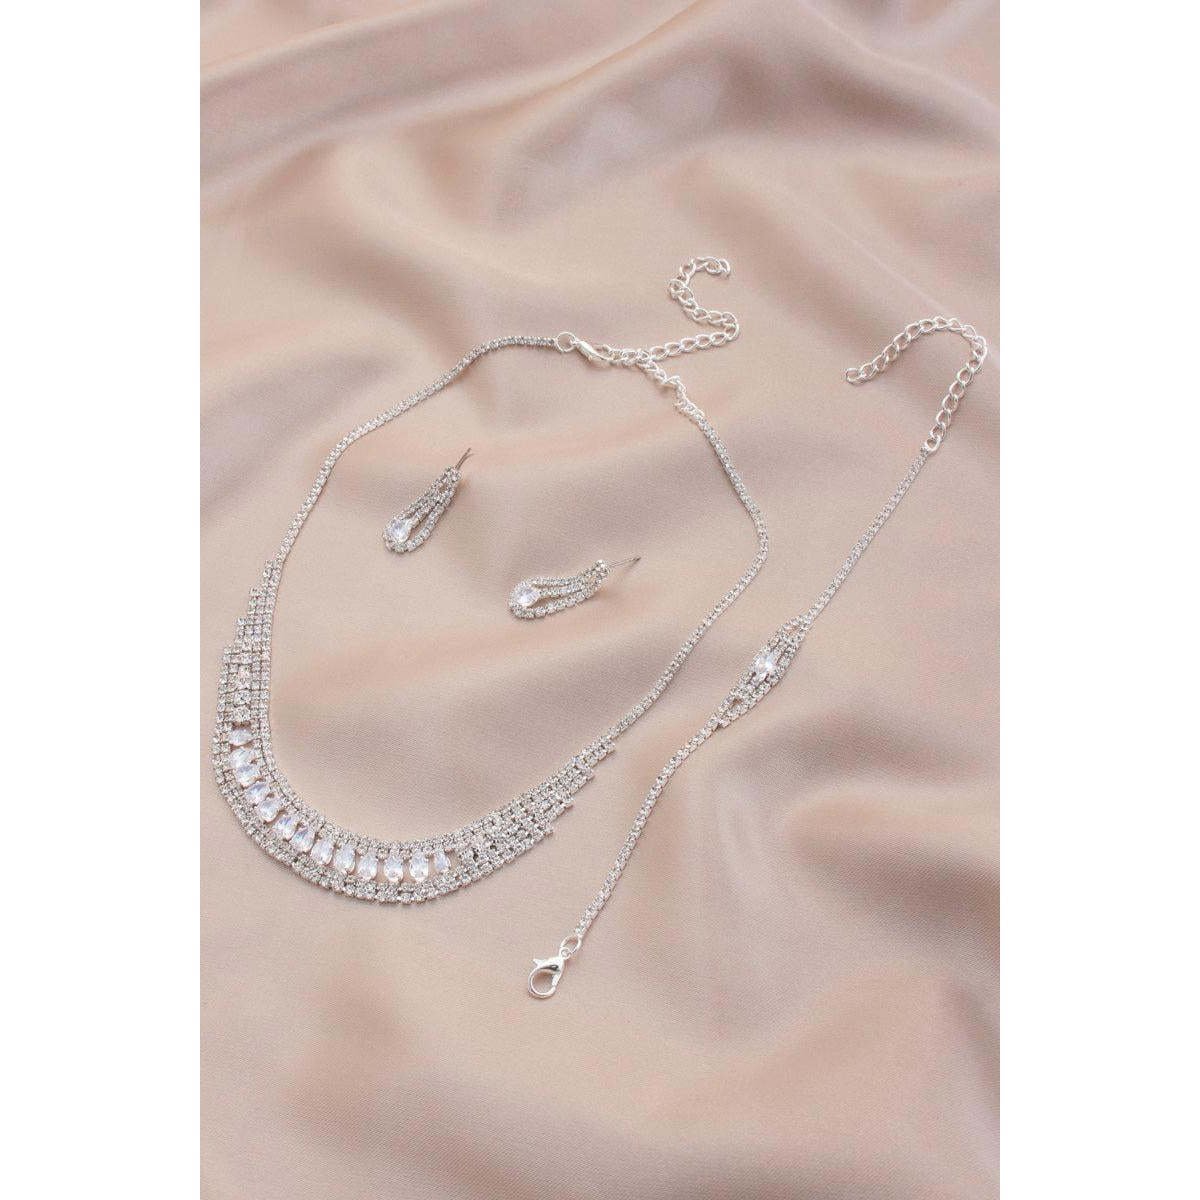 Bridal Rhinestone Bracelet Necklace Set-Jewelry Sets-NXTLVLNYC